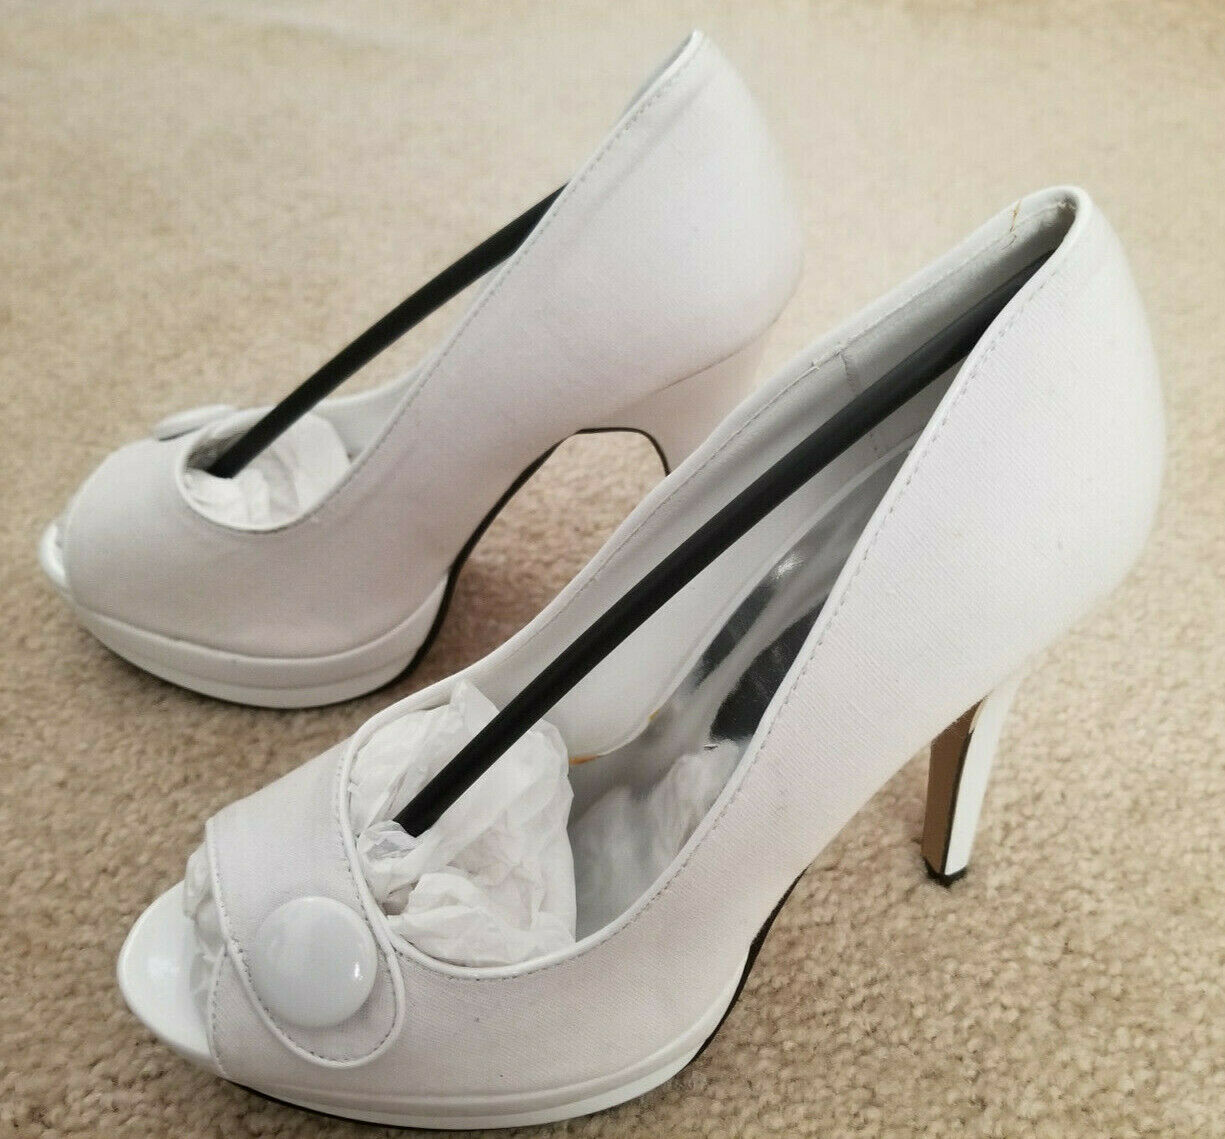 Sexy White Women's Platform High Heel Shoes 4.5" Heel Size 9